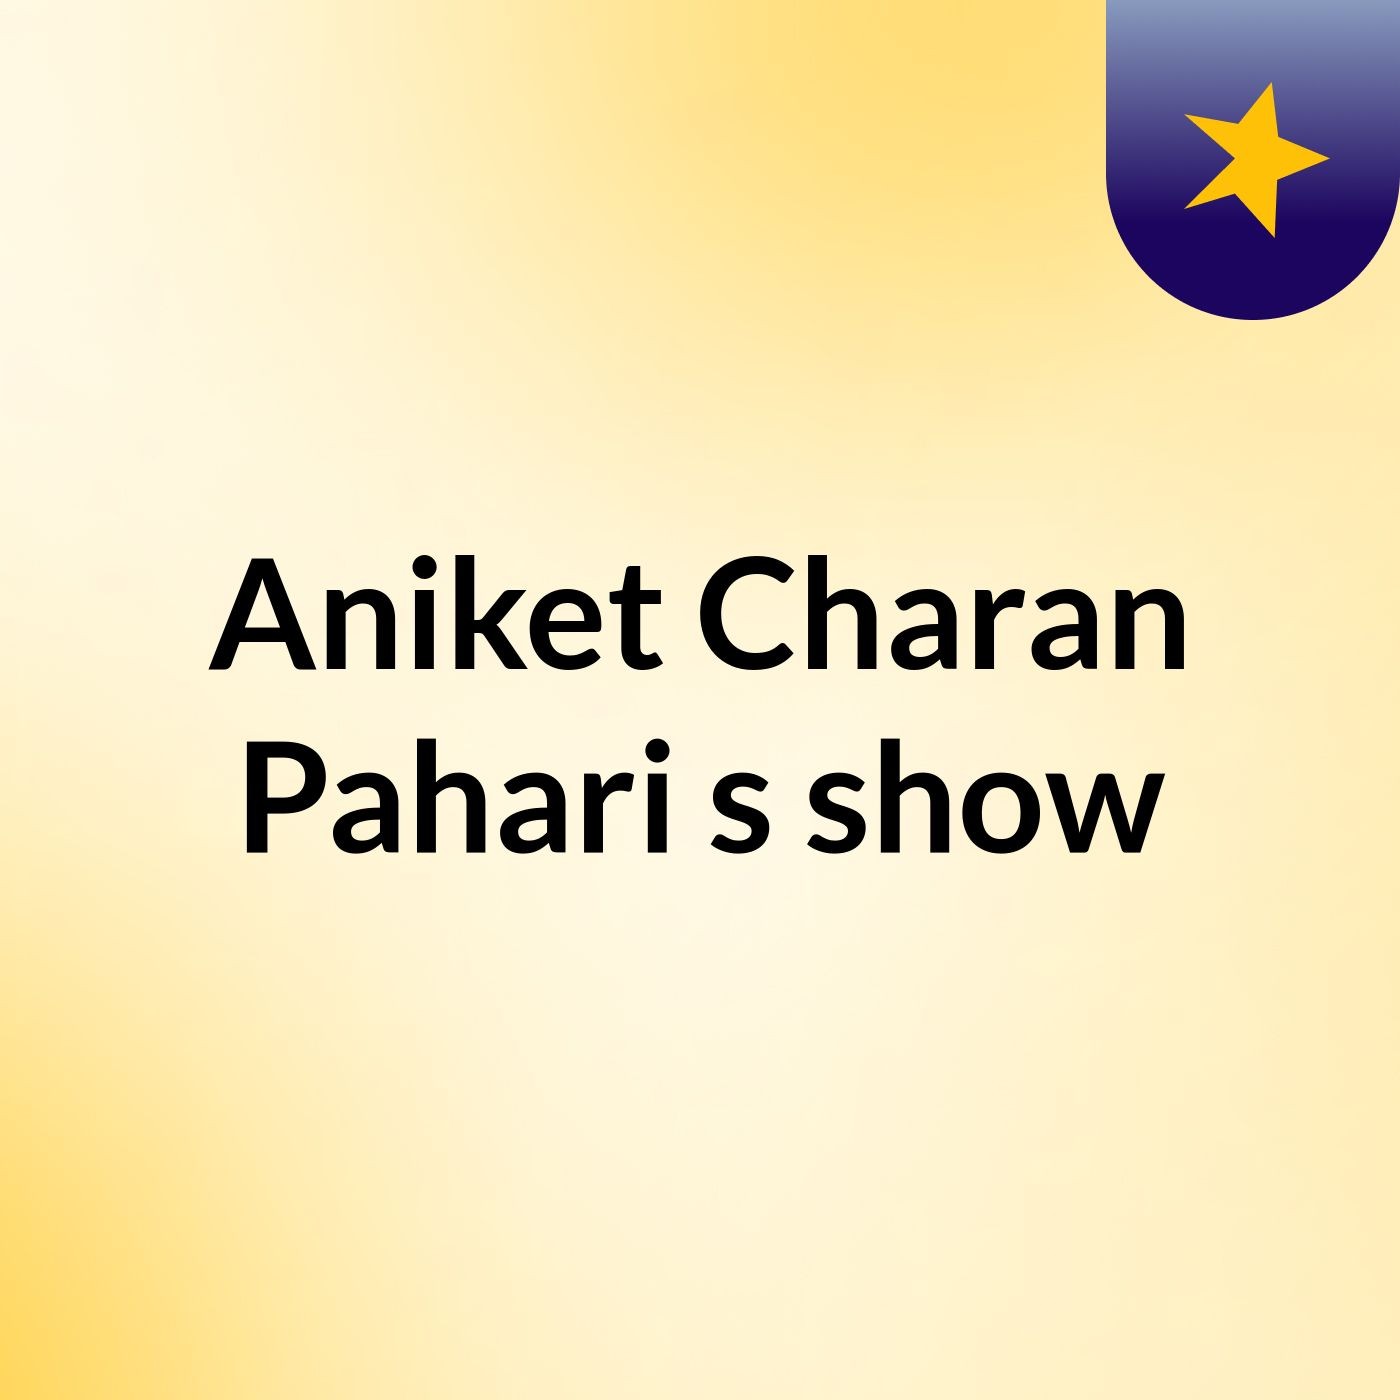 Aniket Charan Pahari's show